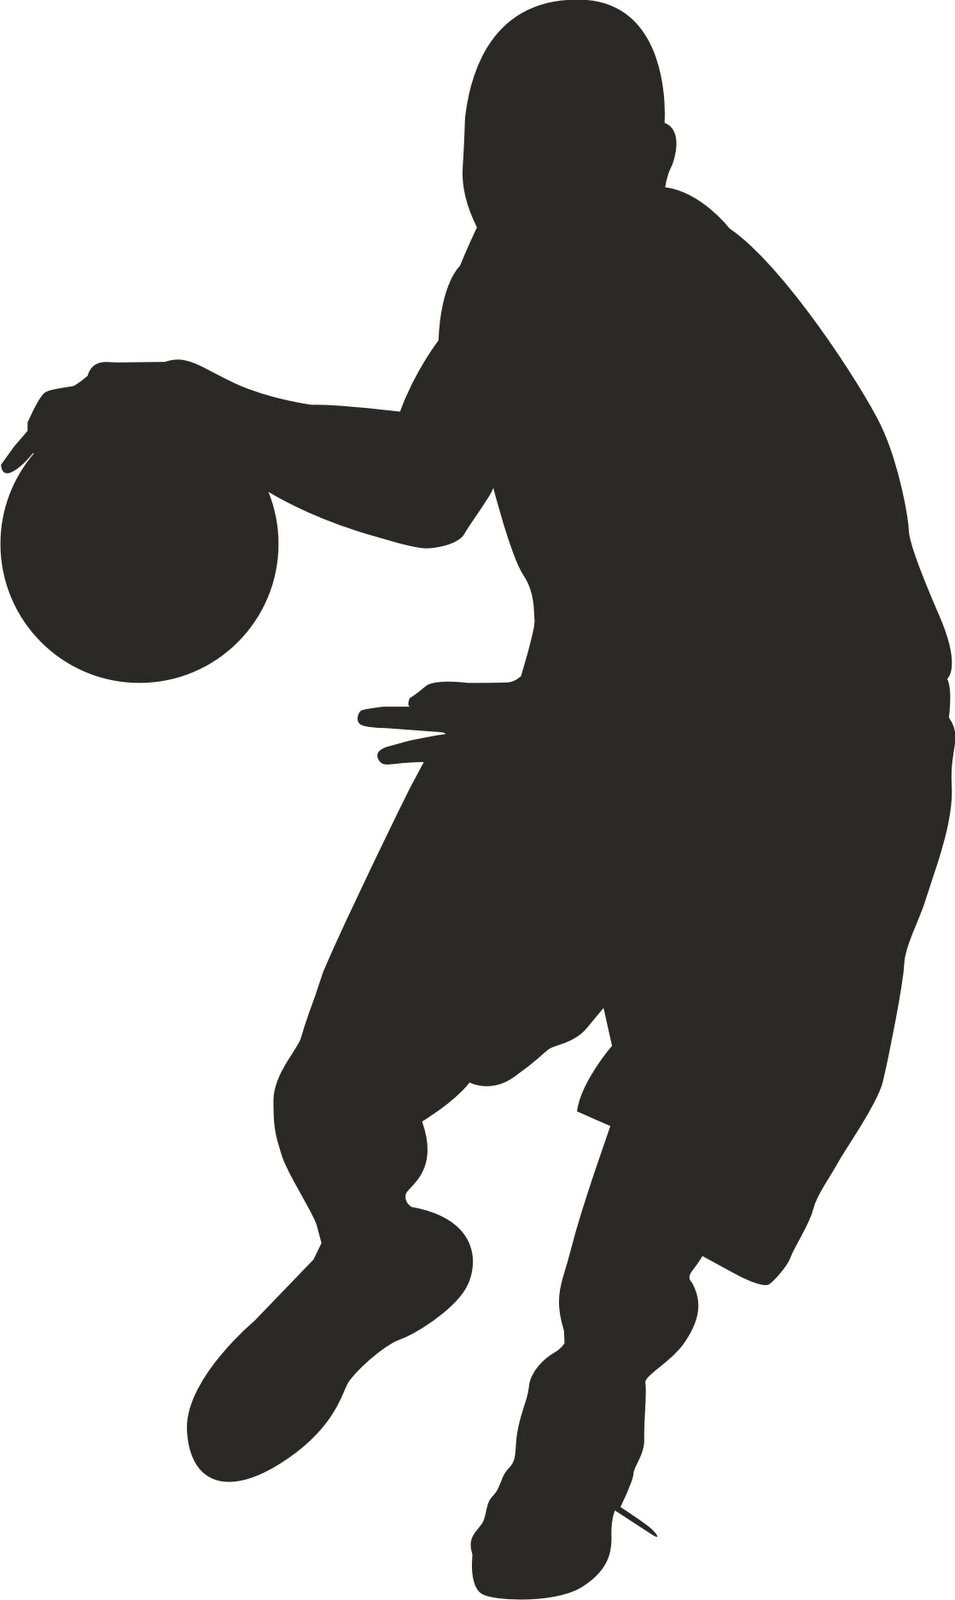 Basketball Vector Art | Free Download Clip Art | Free Clip Art ...